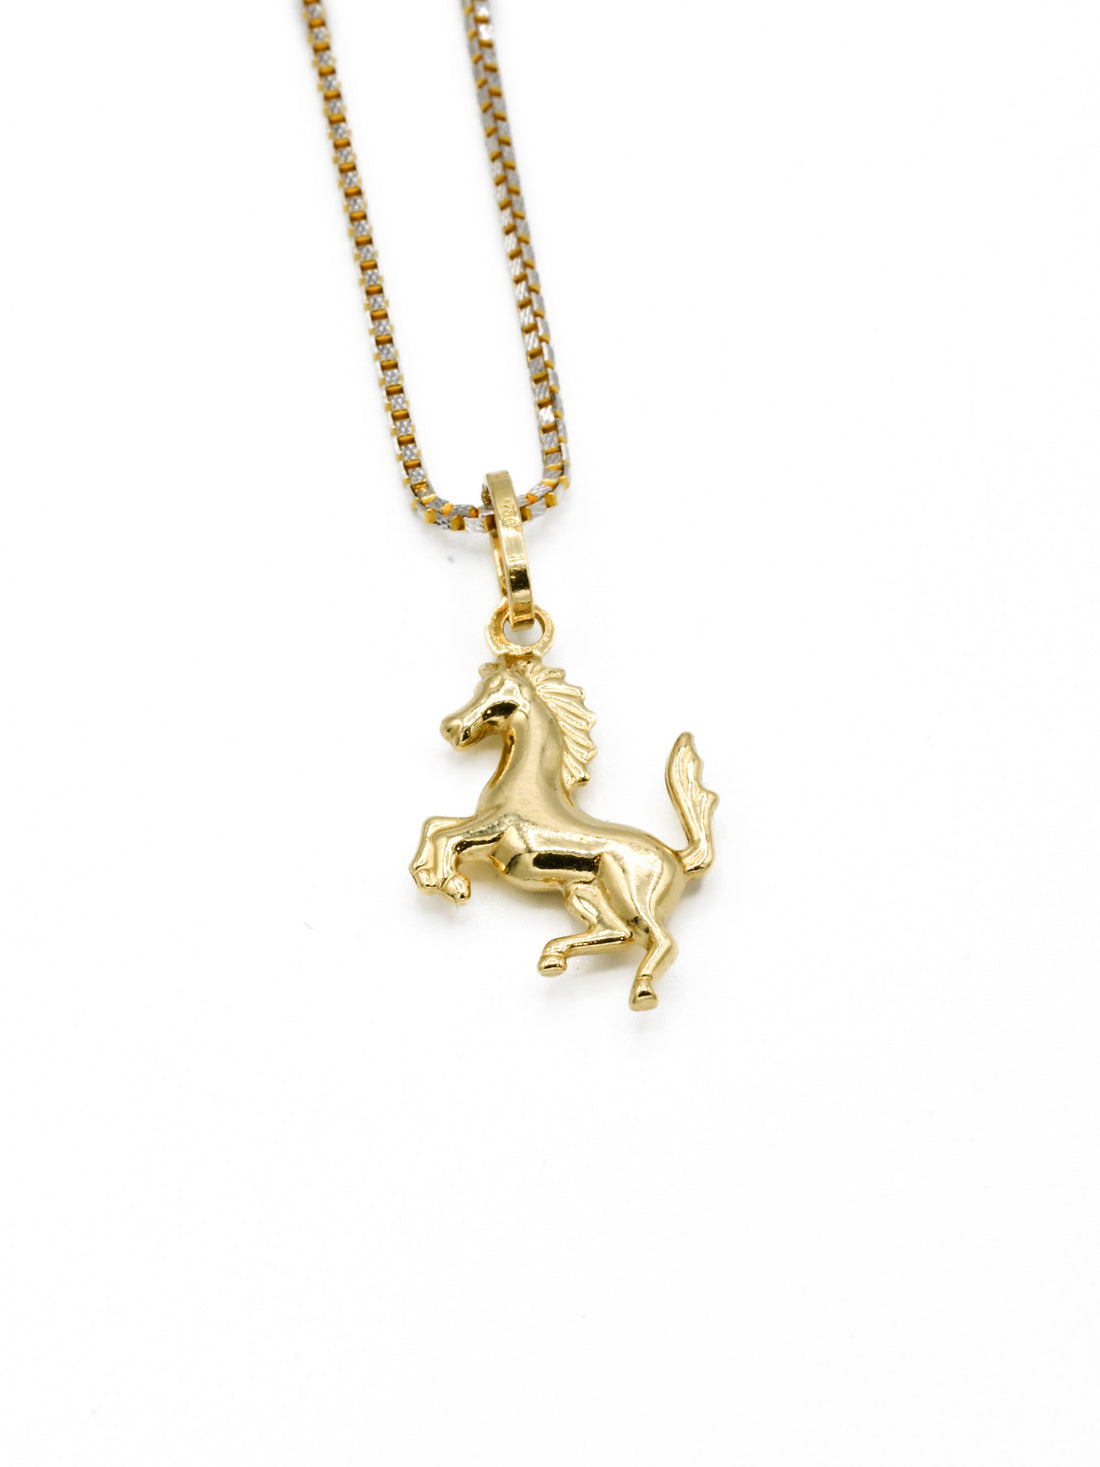 18ct Gold Horse Pendant - Roop Darshan